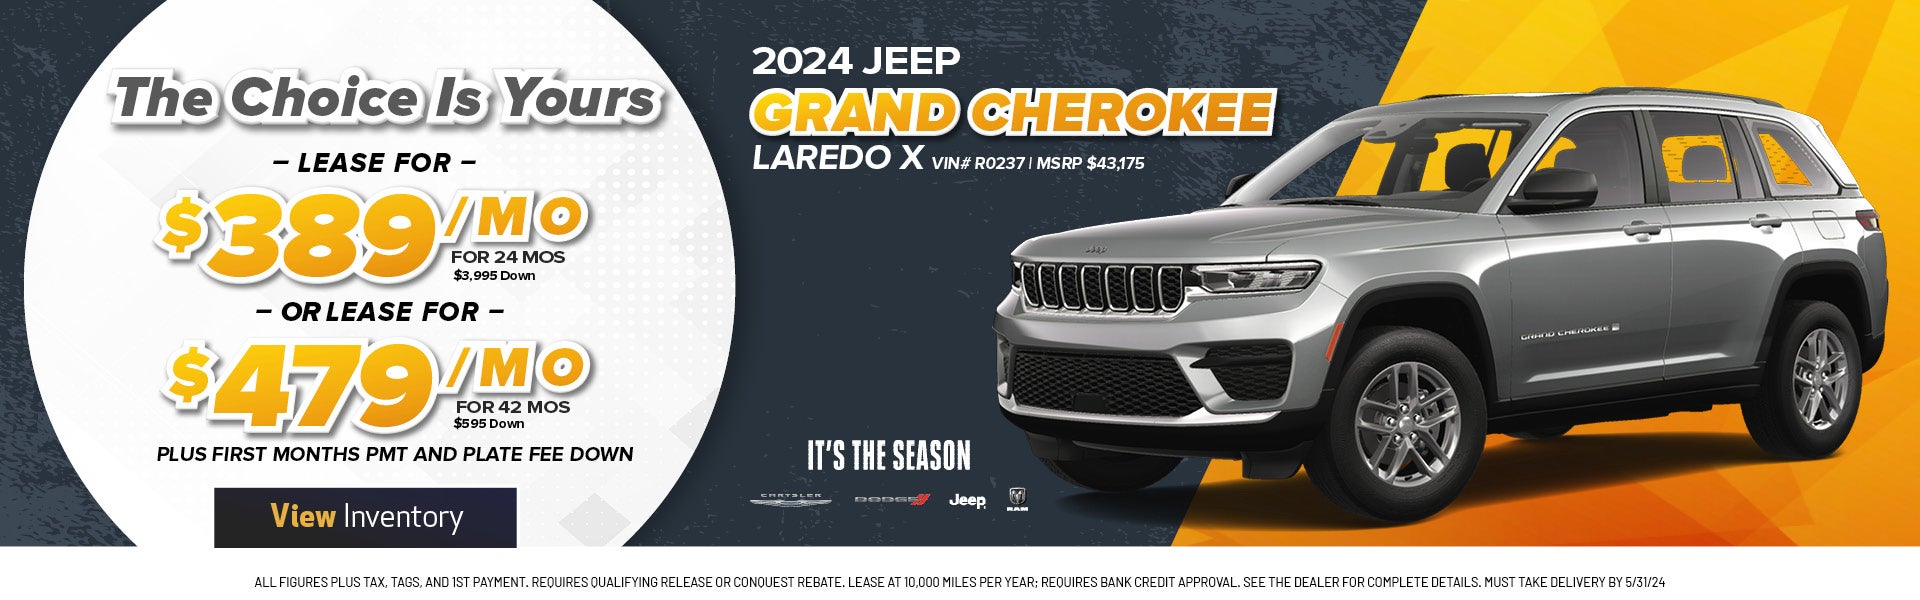 2024 Jeep Grand Cherokee leredo x